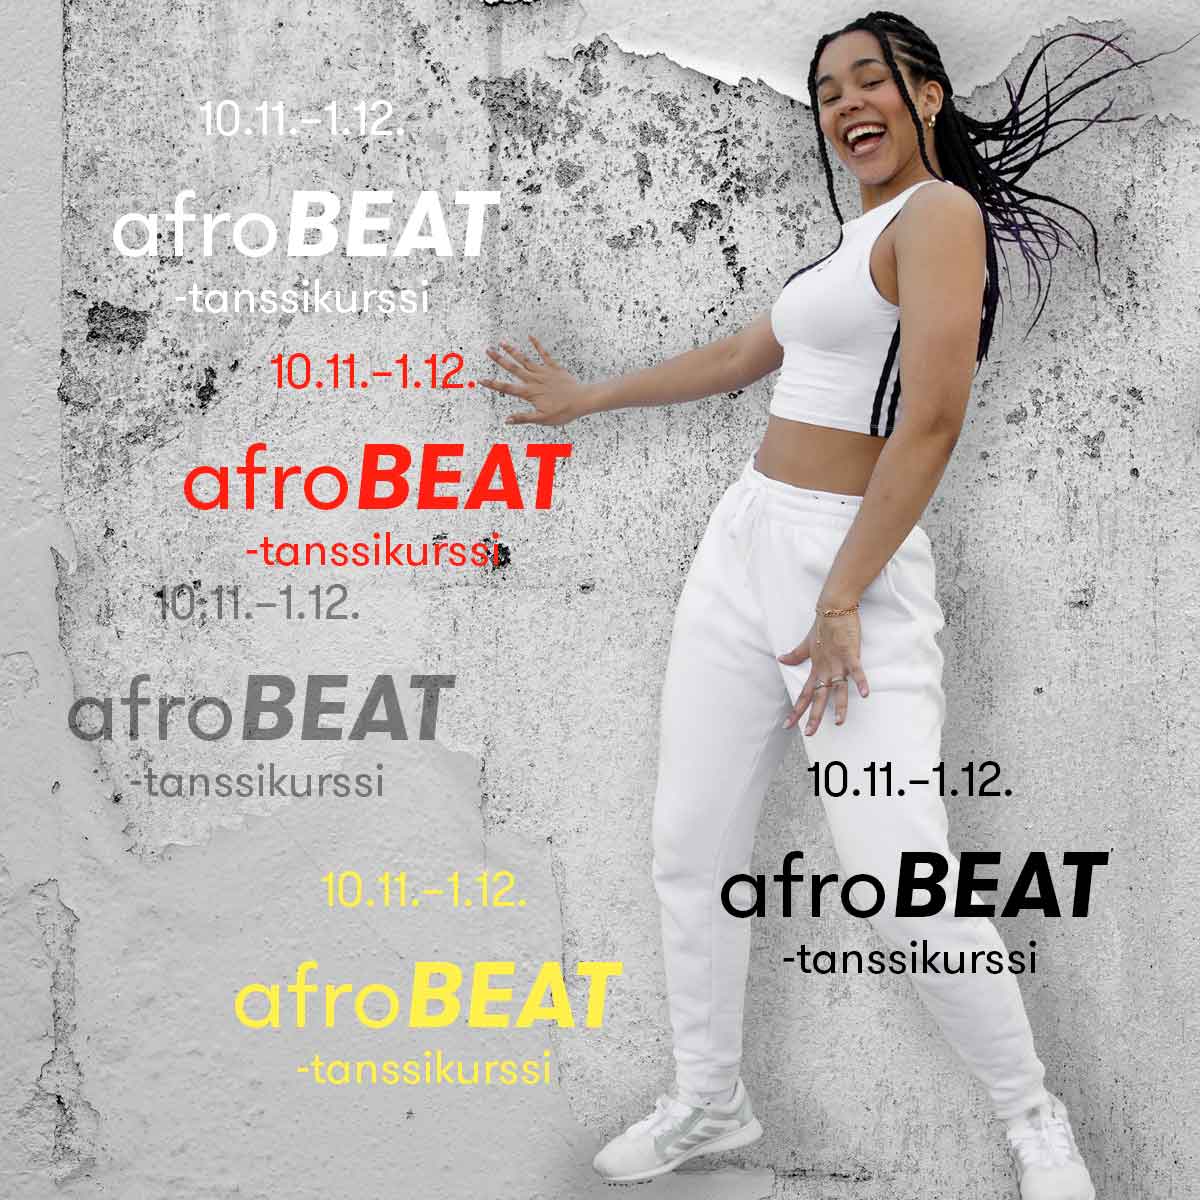 Sikujuan Afrobeat-tanssikurssi alkaa 10.11.